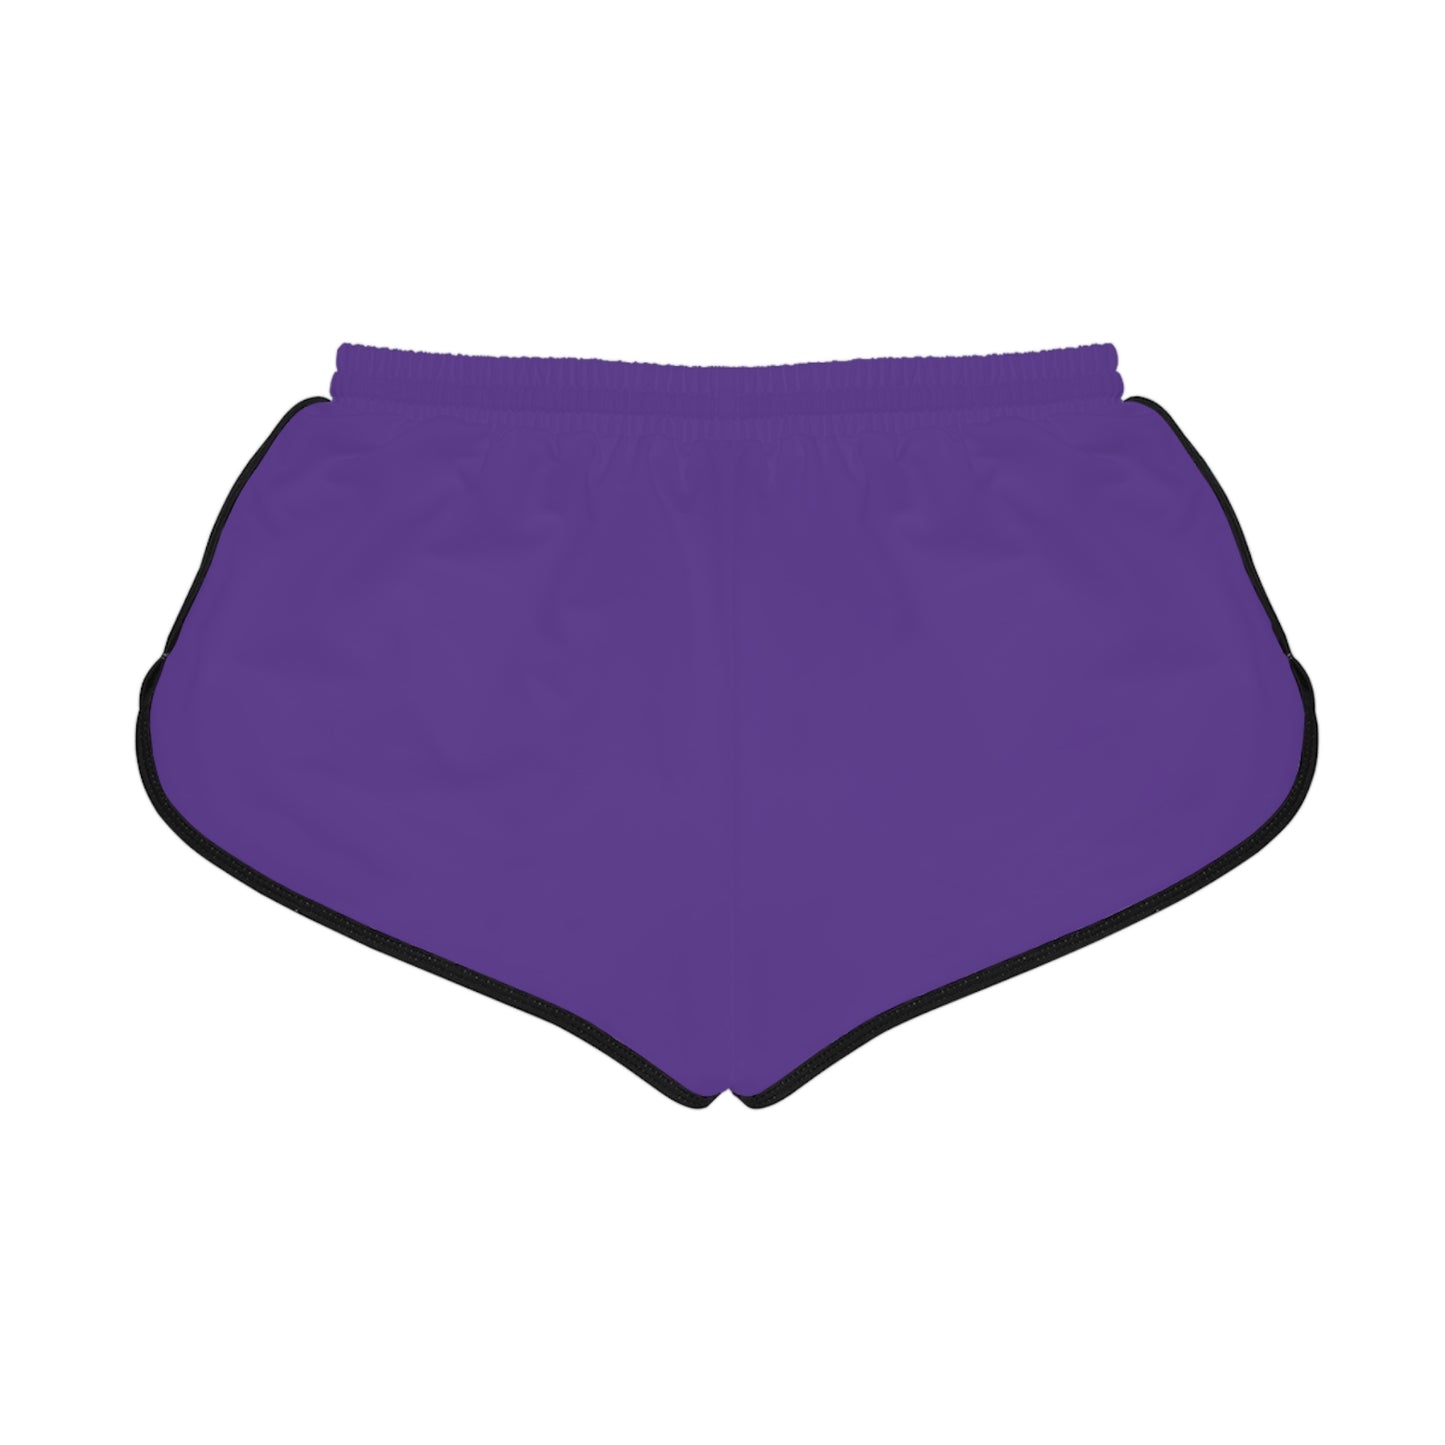 Purple Women's Relaxed Shorts